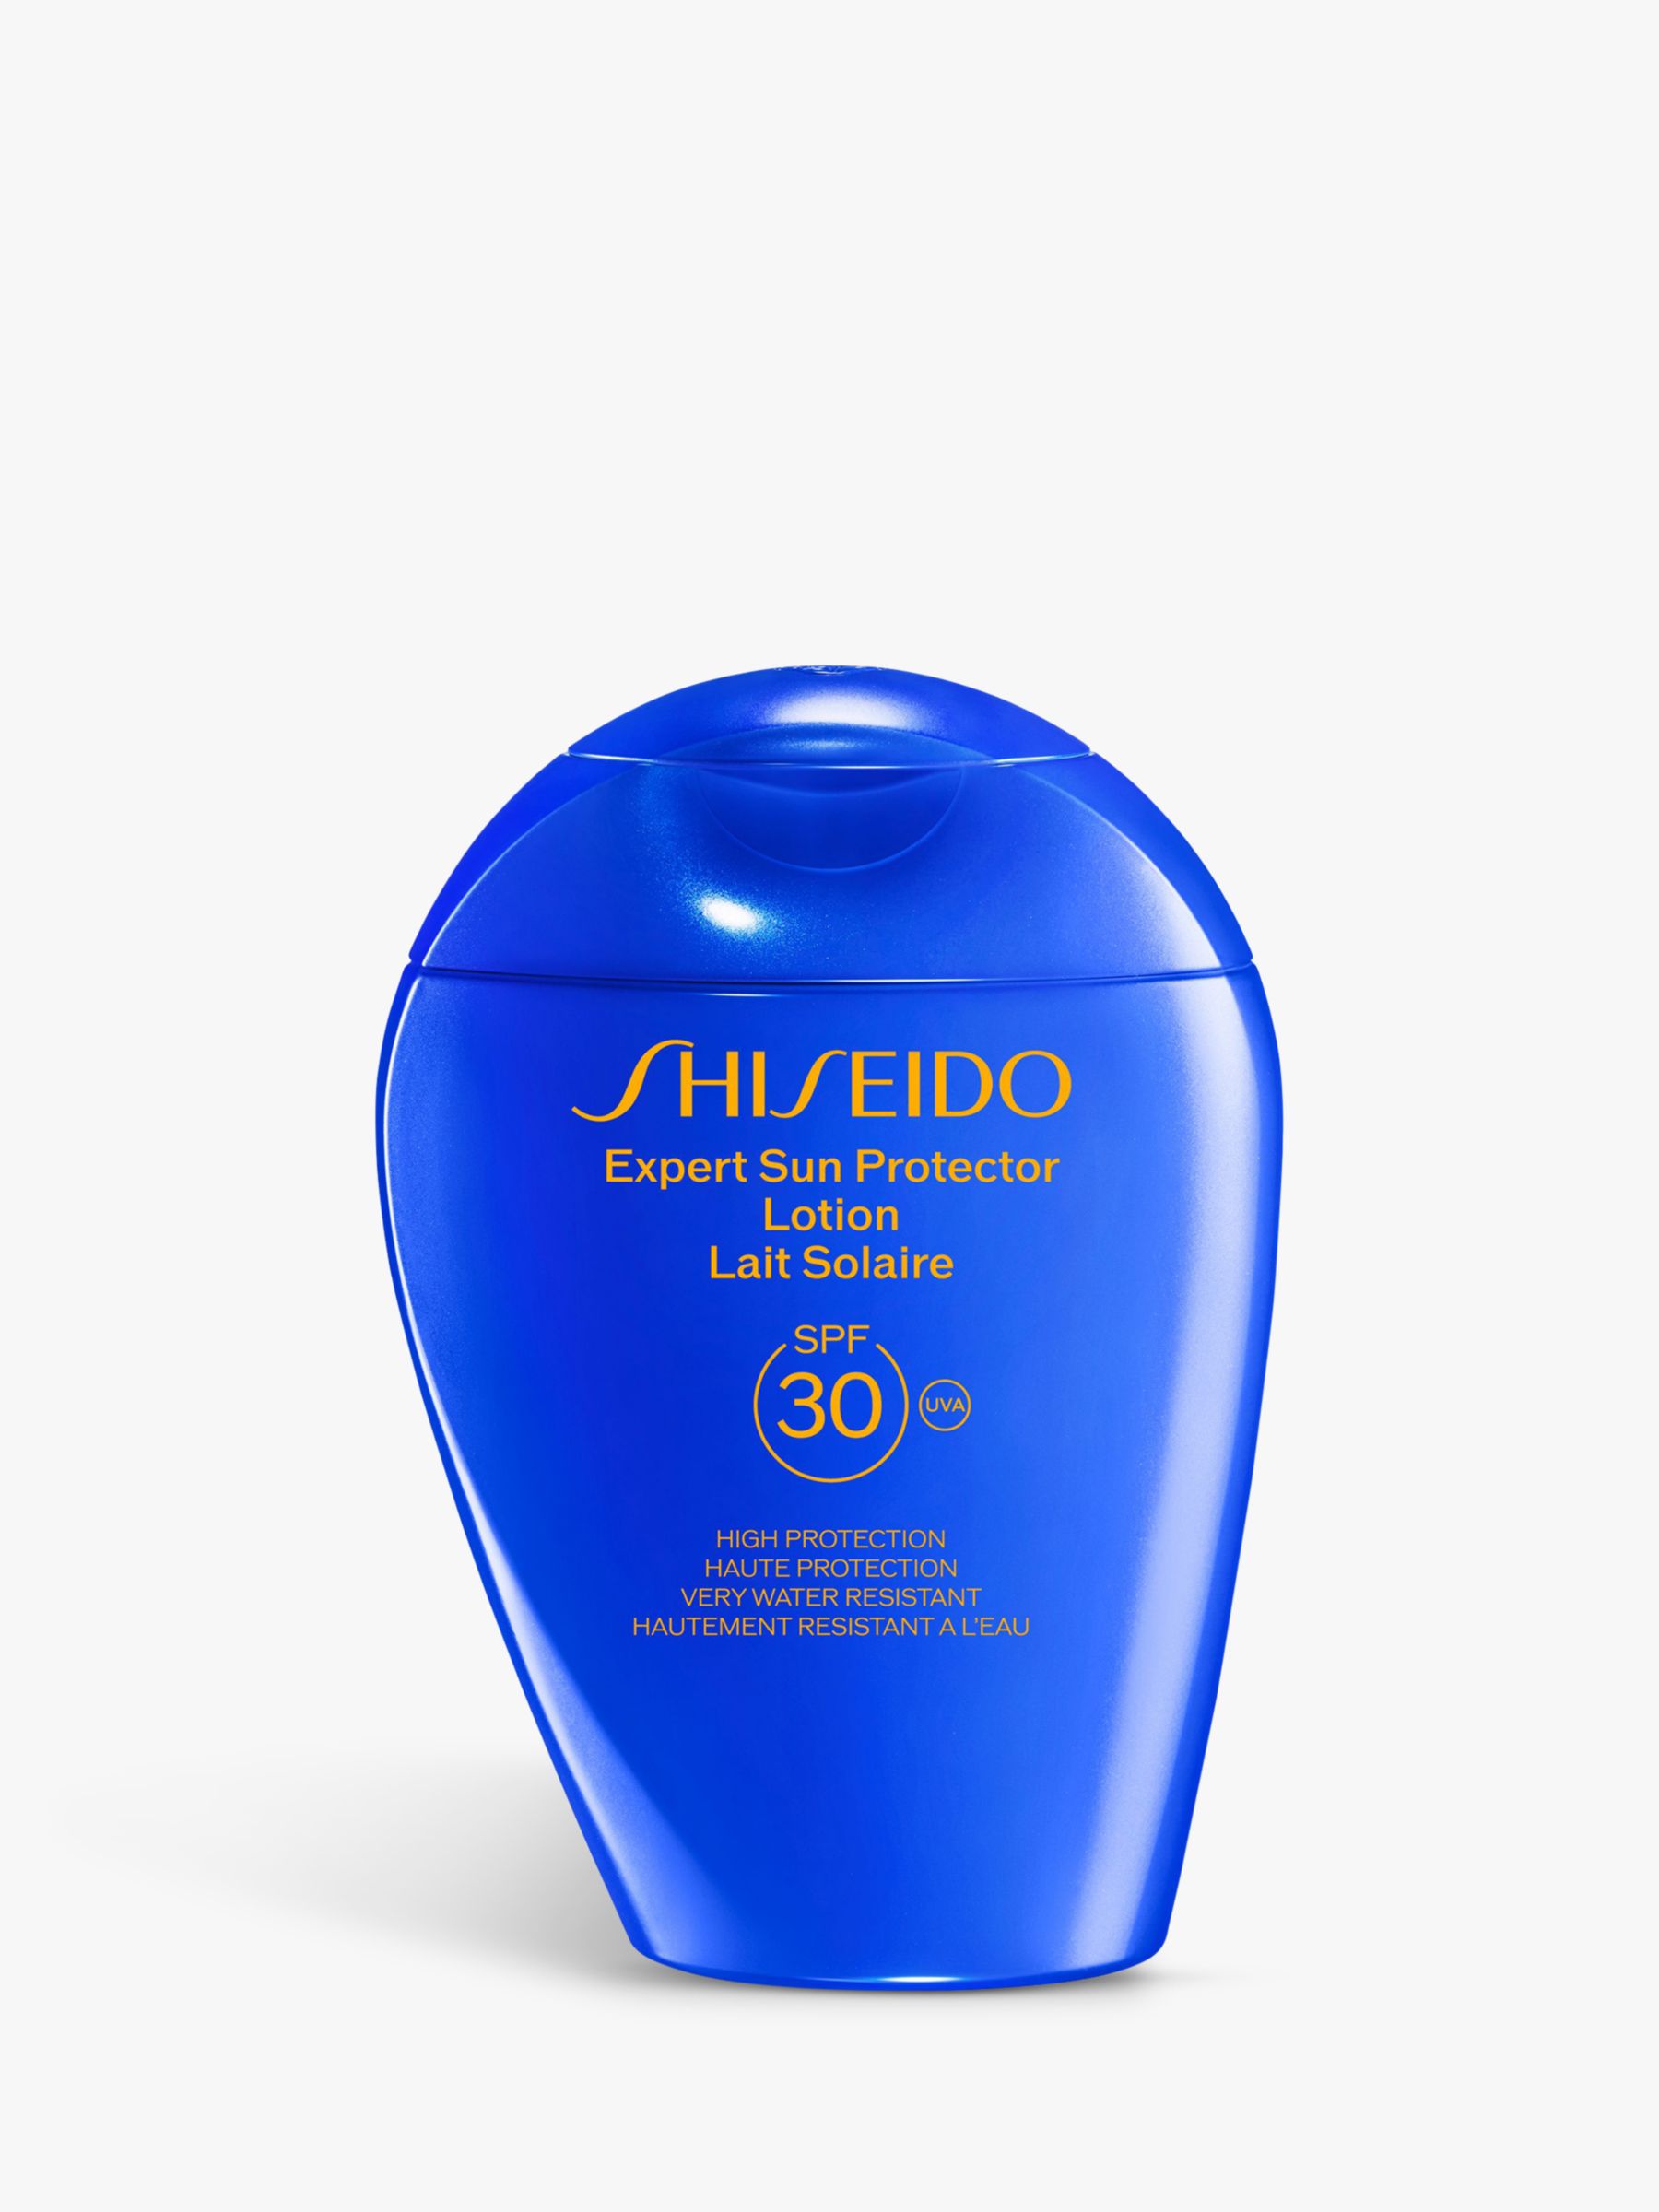 Shiseido Expert Sun Protector Lotion SPF 30, 150ml 1